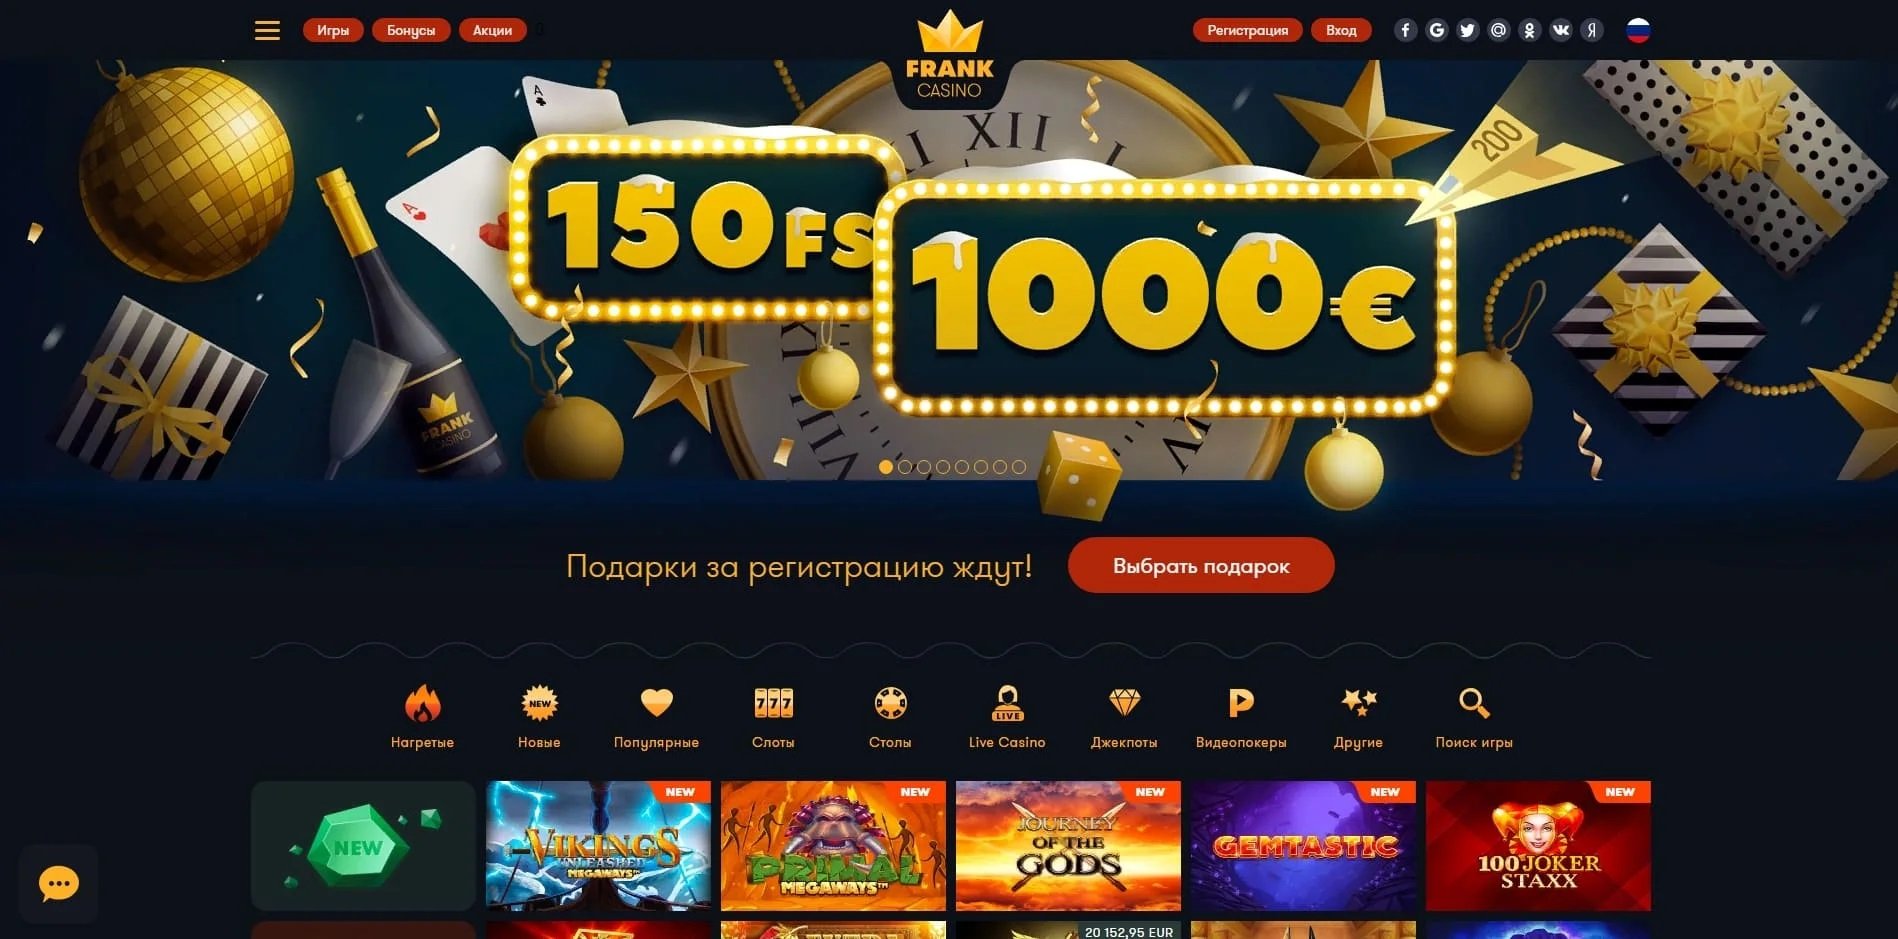 Франк казино онлайн скачать казакша государство эротика онлайн чат рулетка